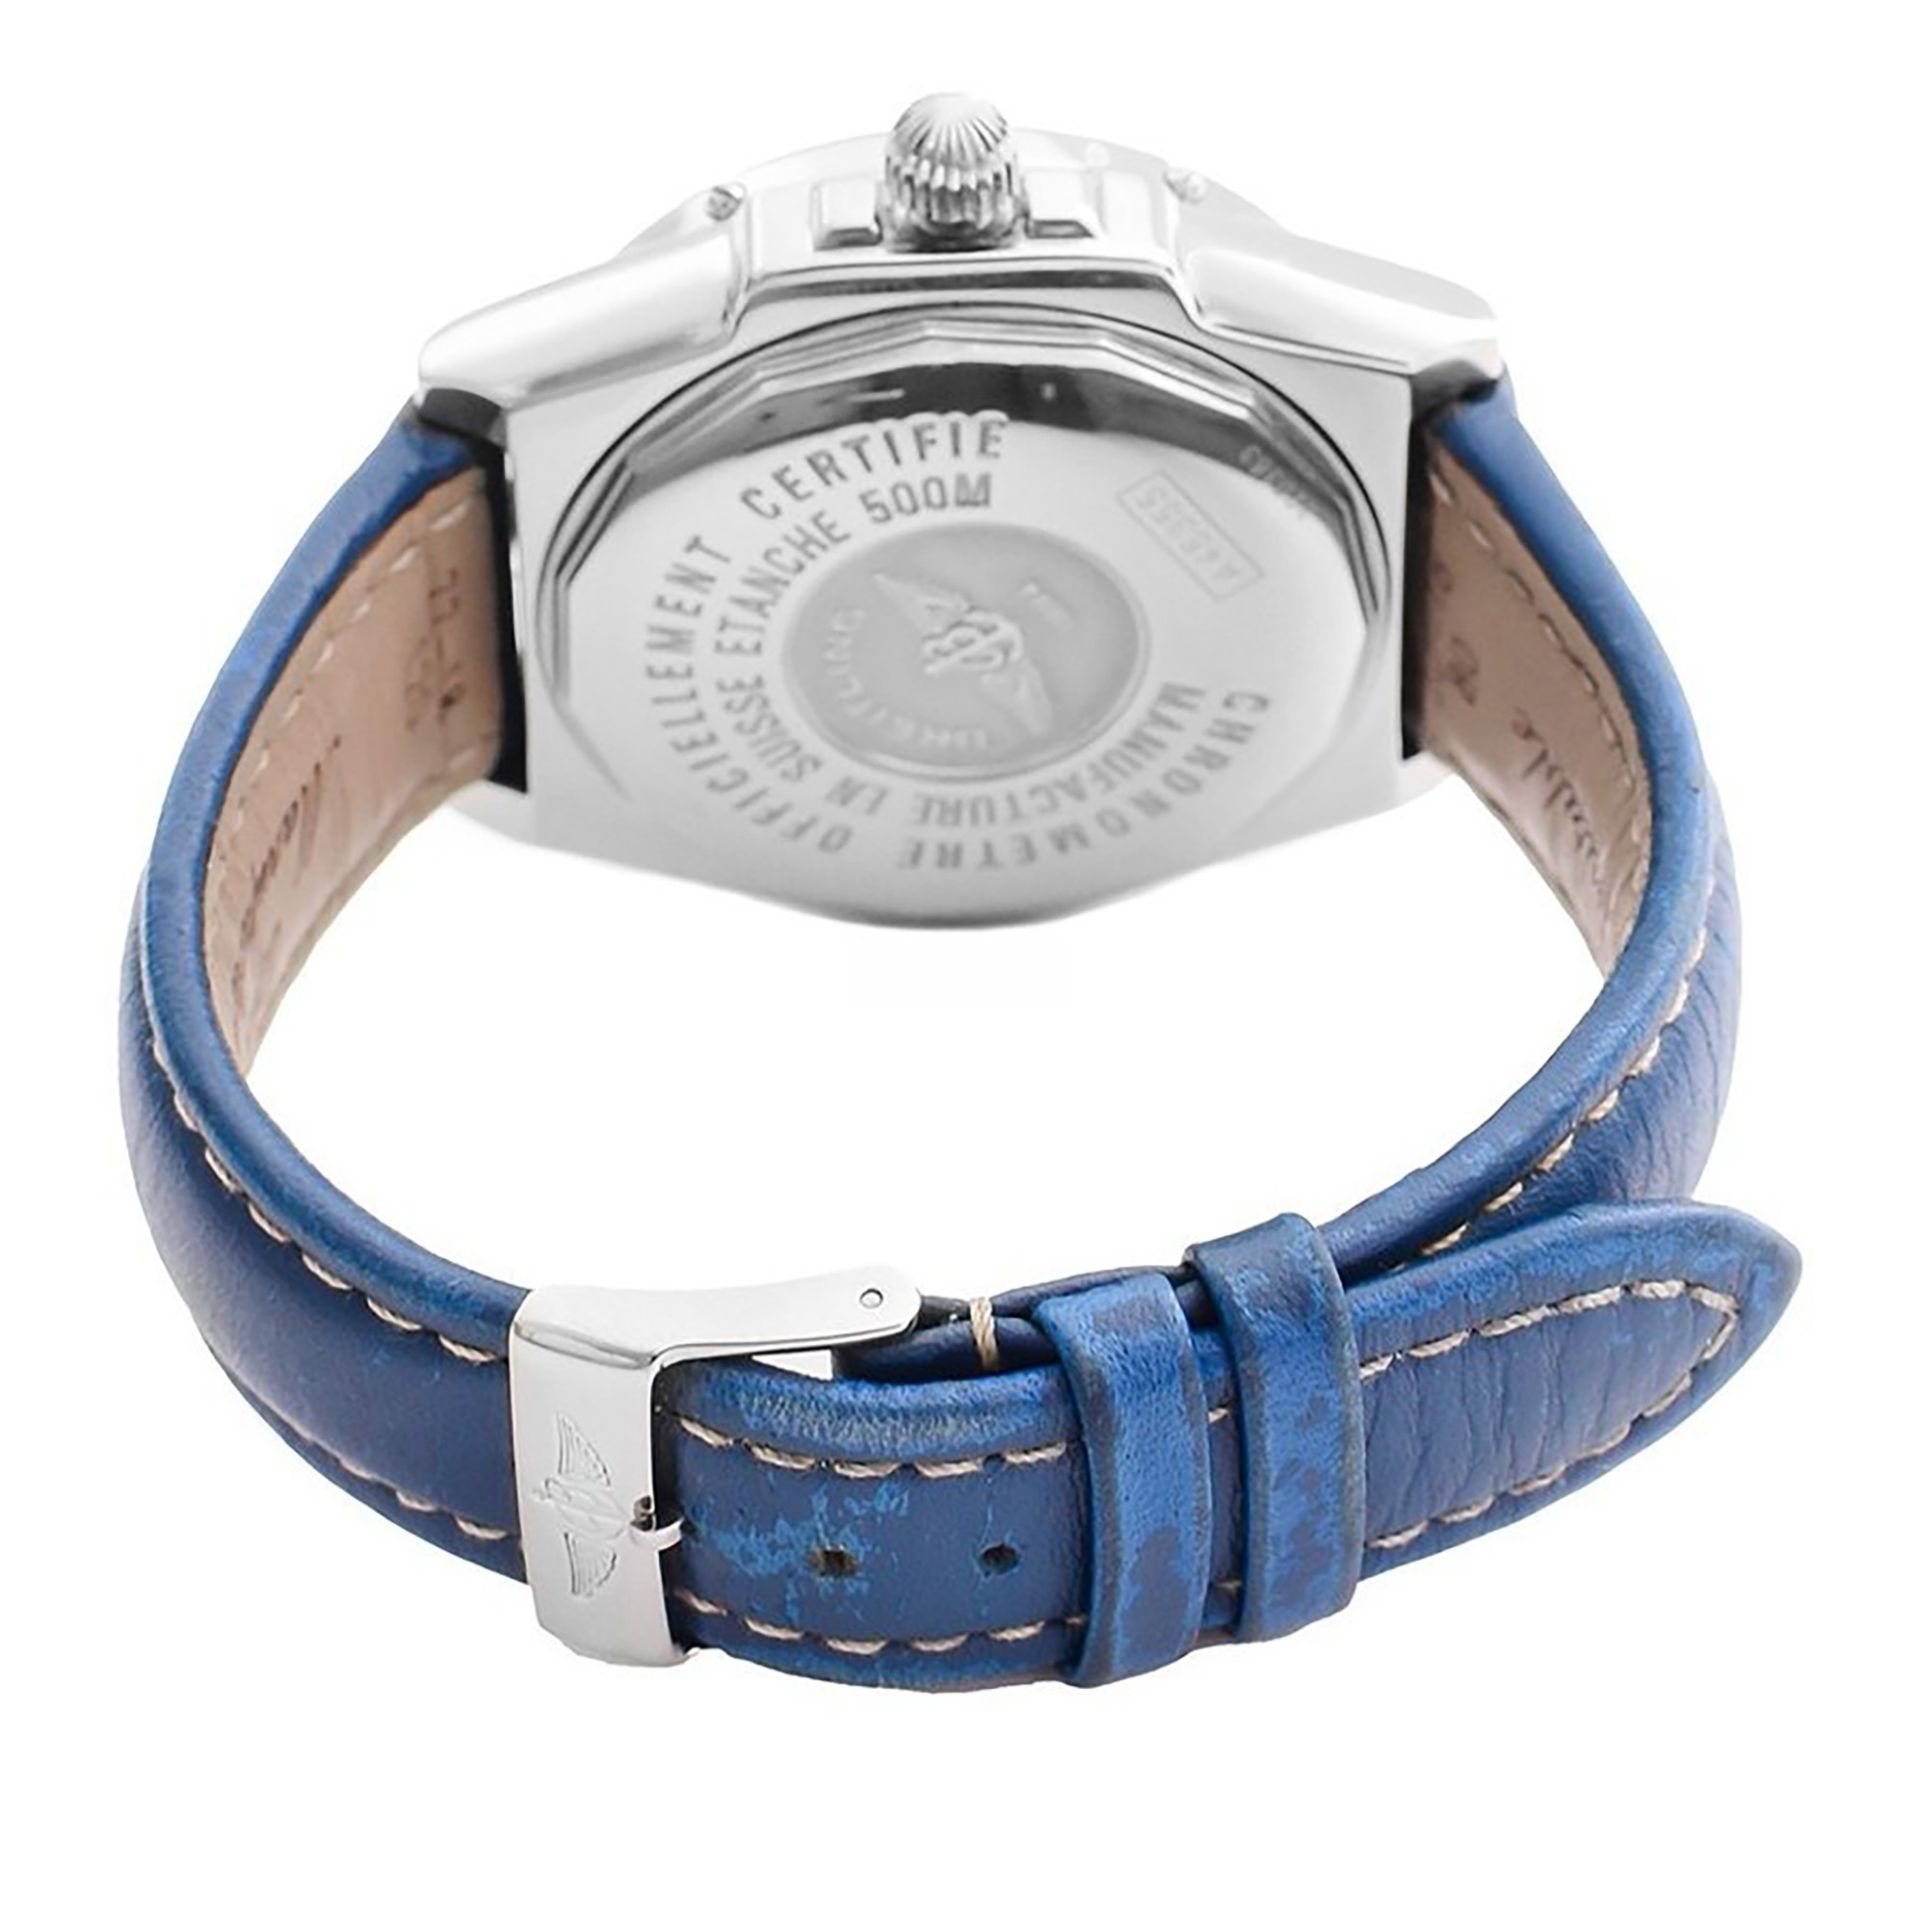 Breitling Headwind A45355 automatic steel wristwatch - Image 2 of 7